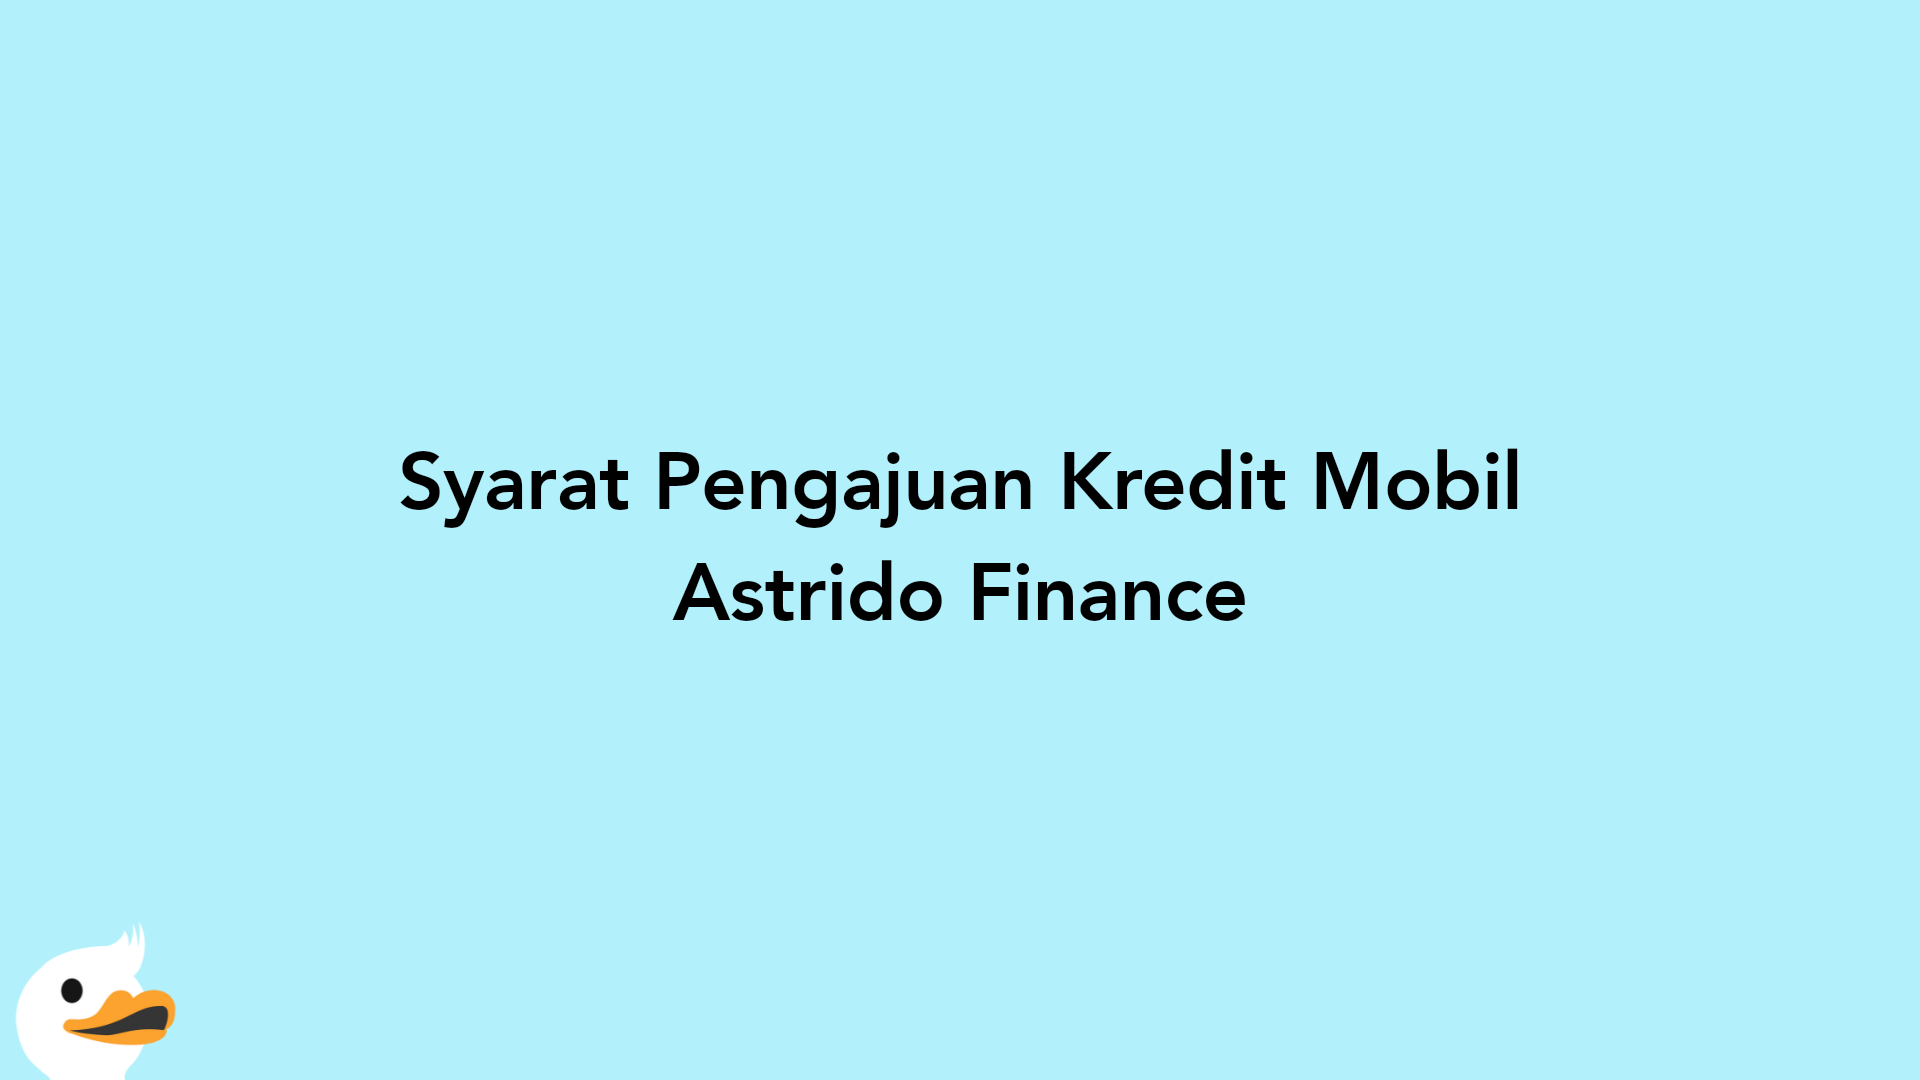 Syarat Pengajuan Kredit Mobil Astrido Finance